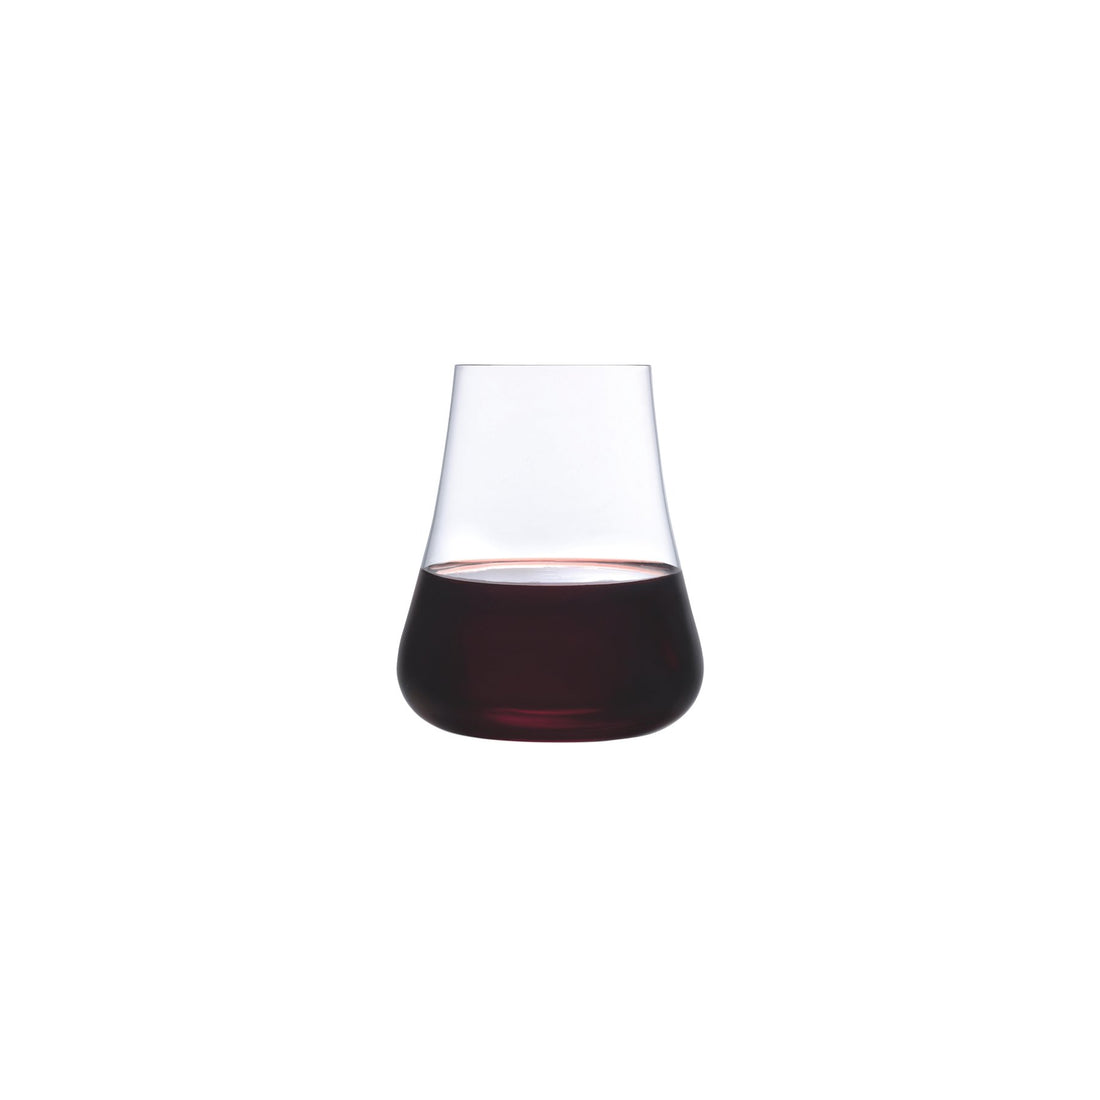 NUDE Stem Zero Volcano glass with red wine